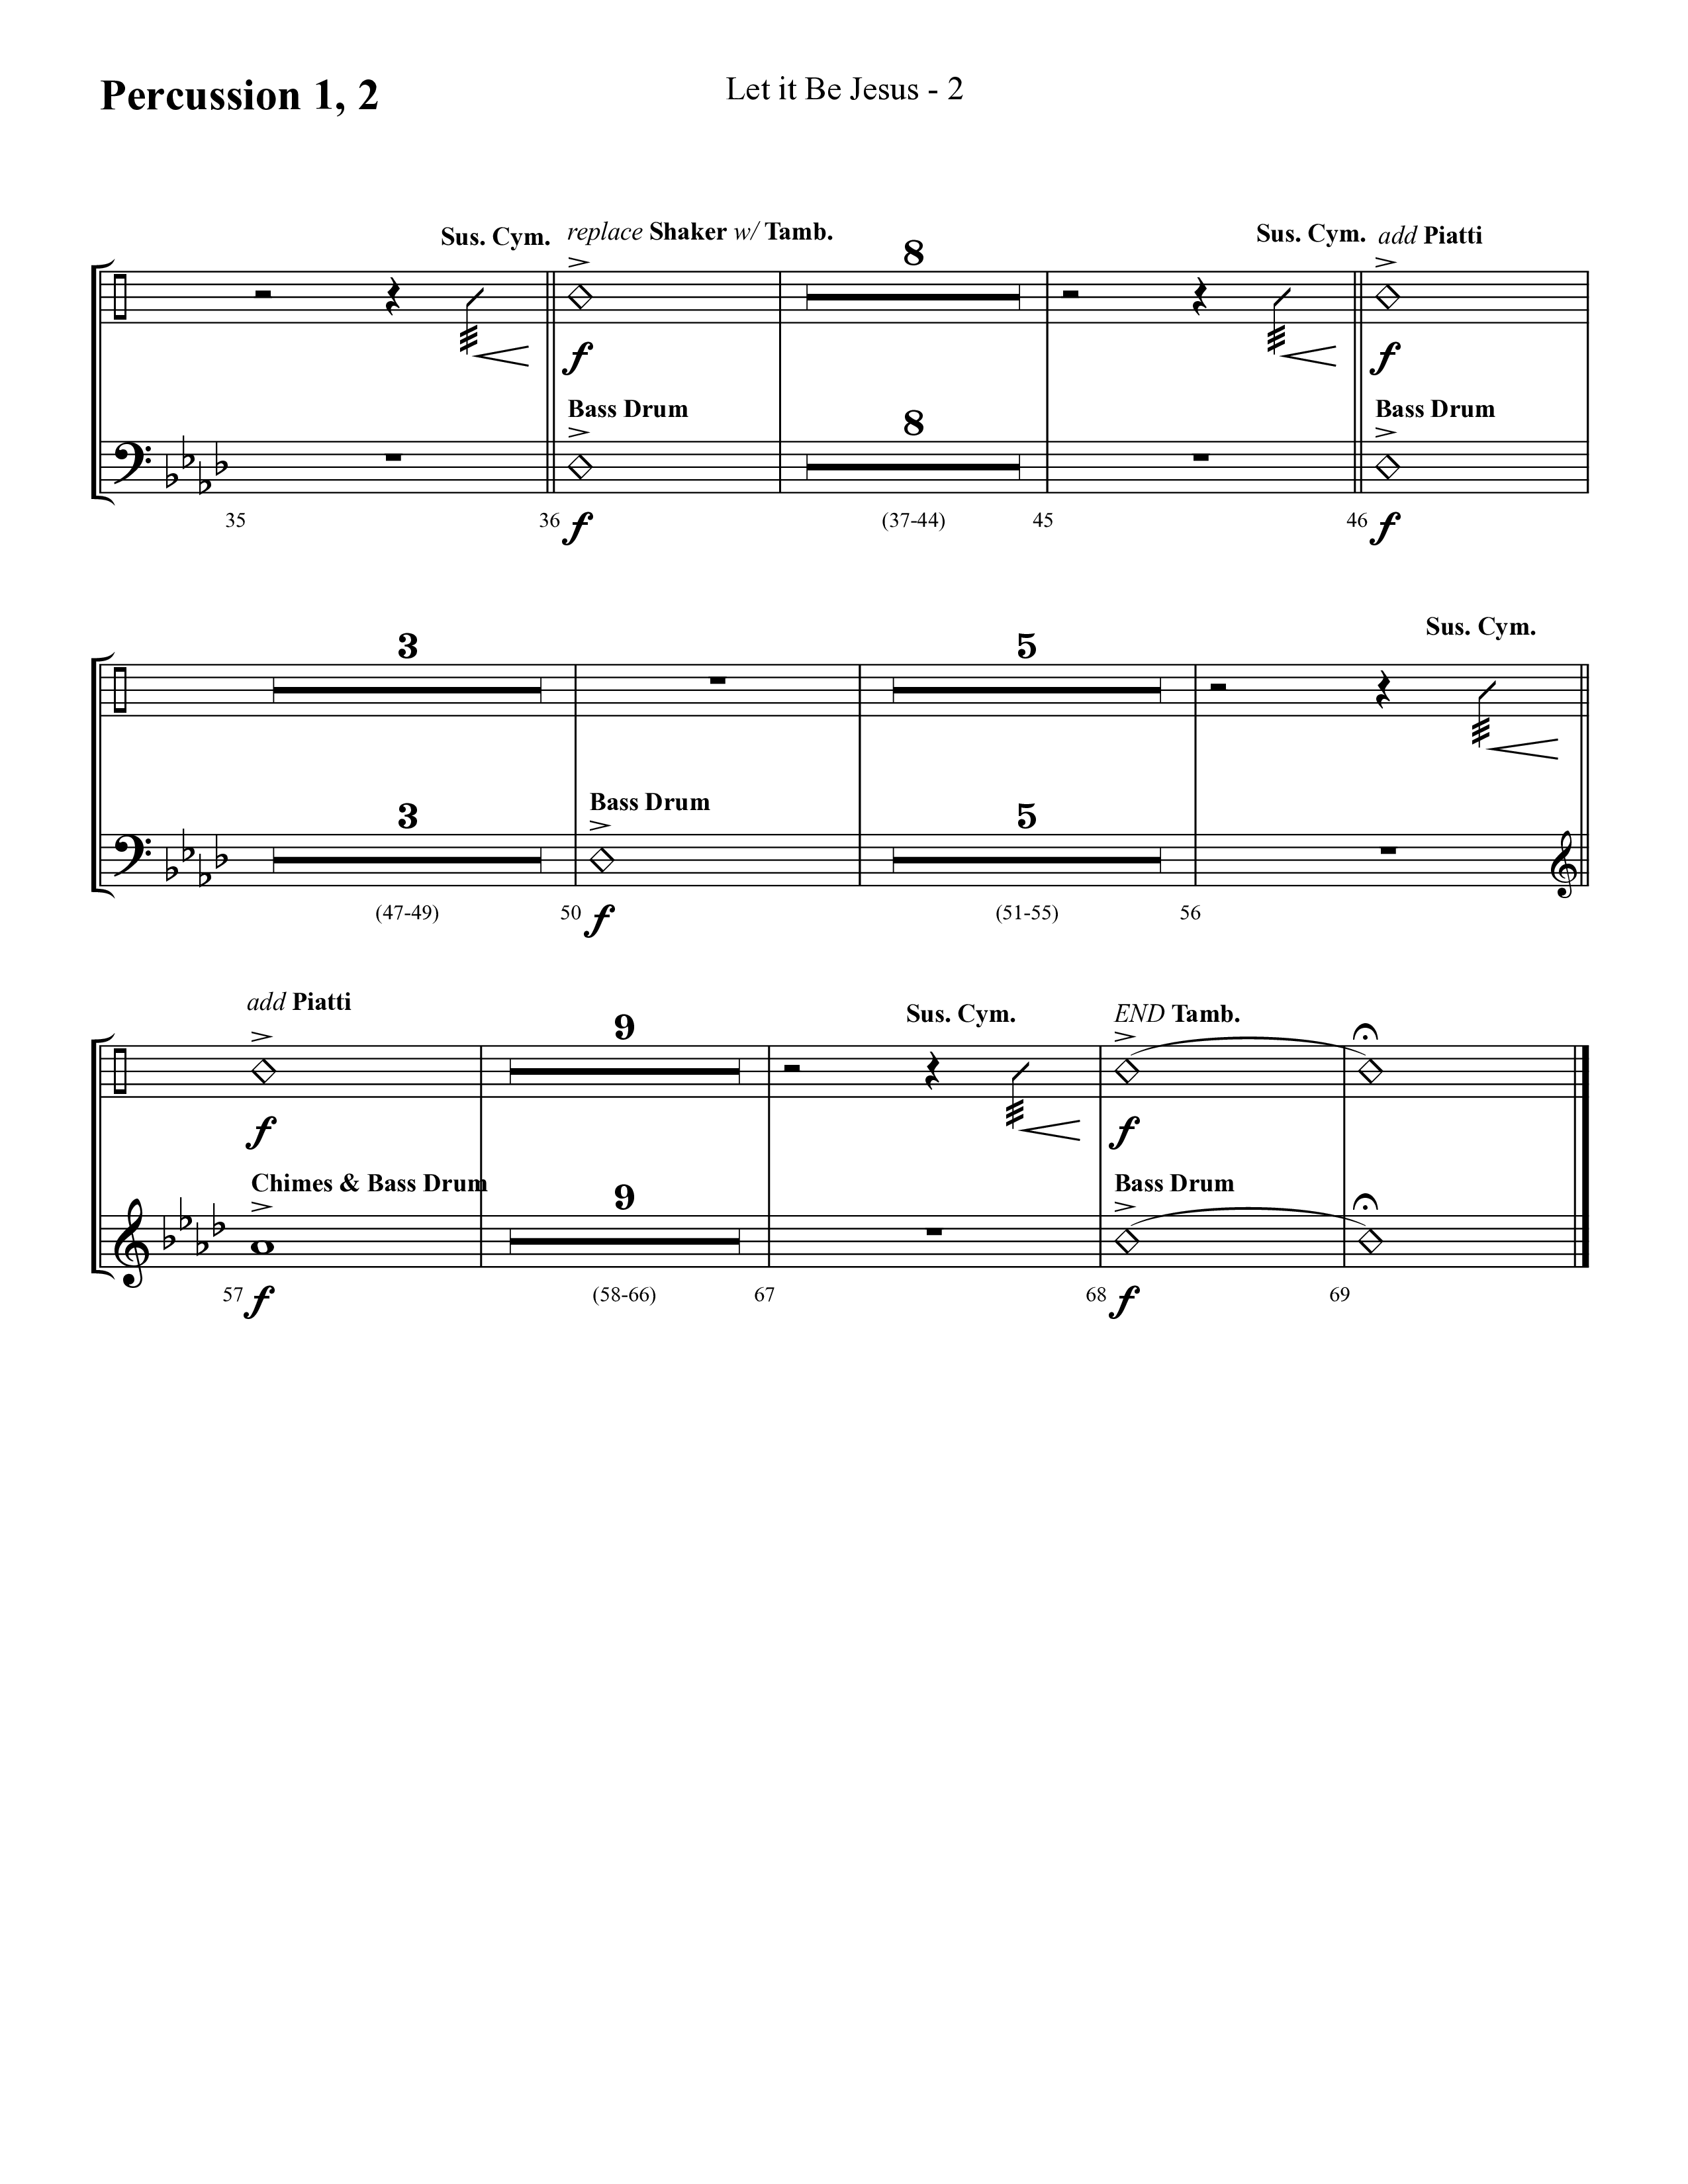 Let It Be Jesus (Choral Anthem SATB) Percussion 1/2 (Lifeway Choral / Arr. Cliff Duren)